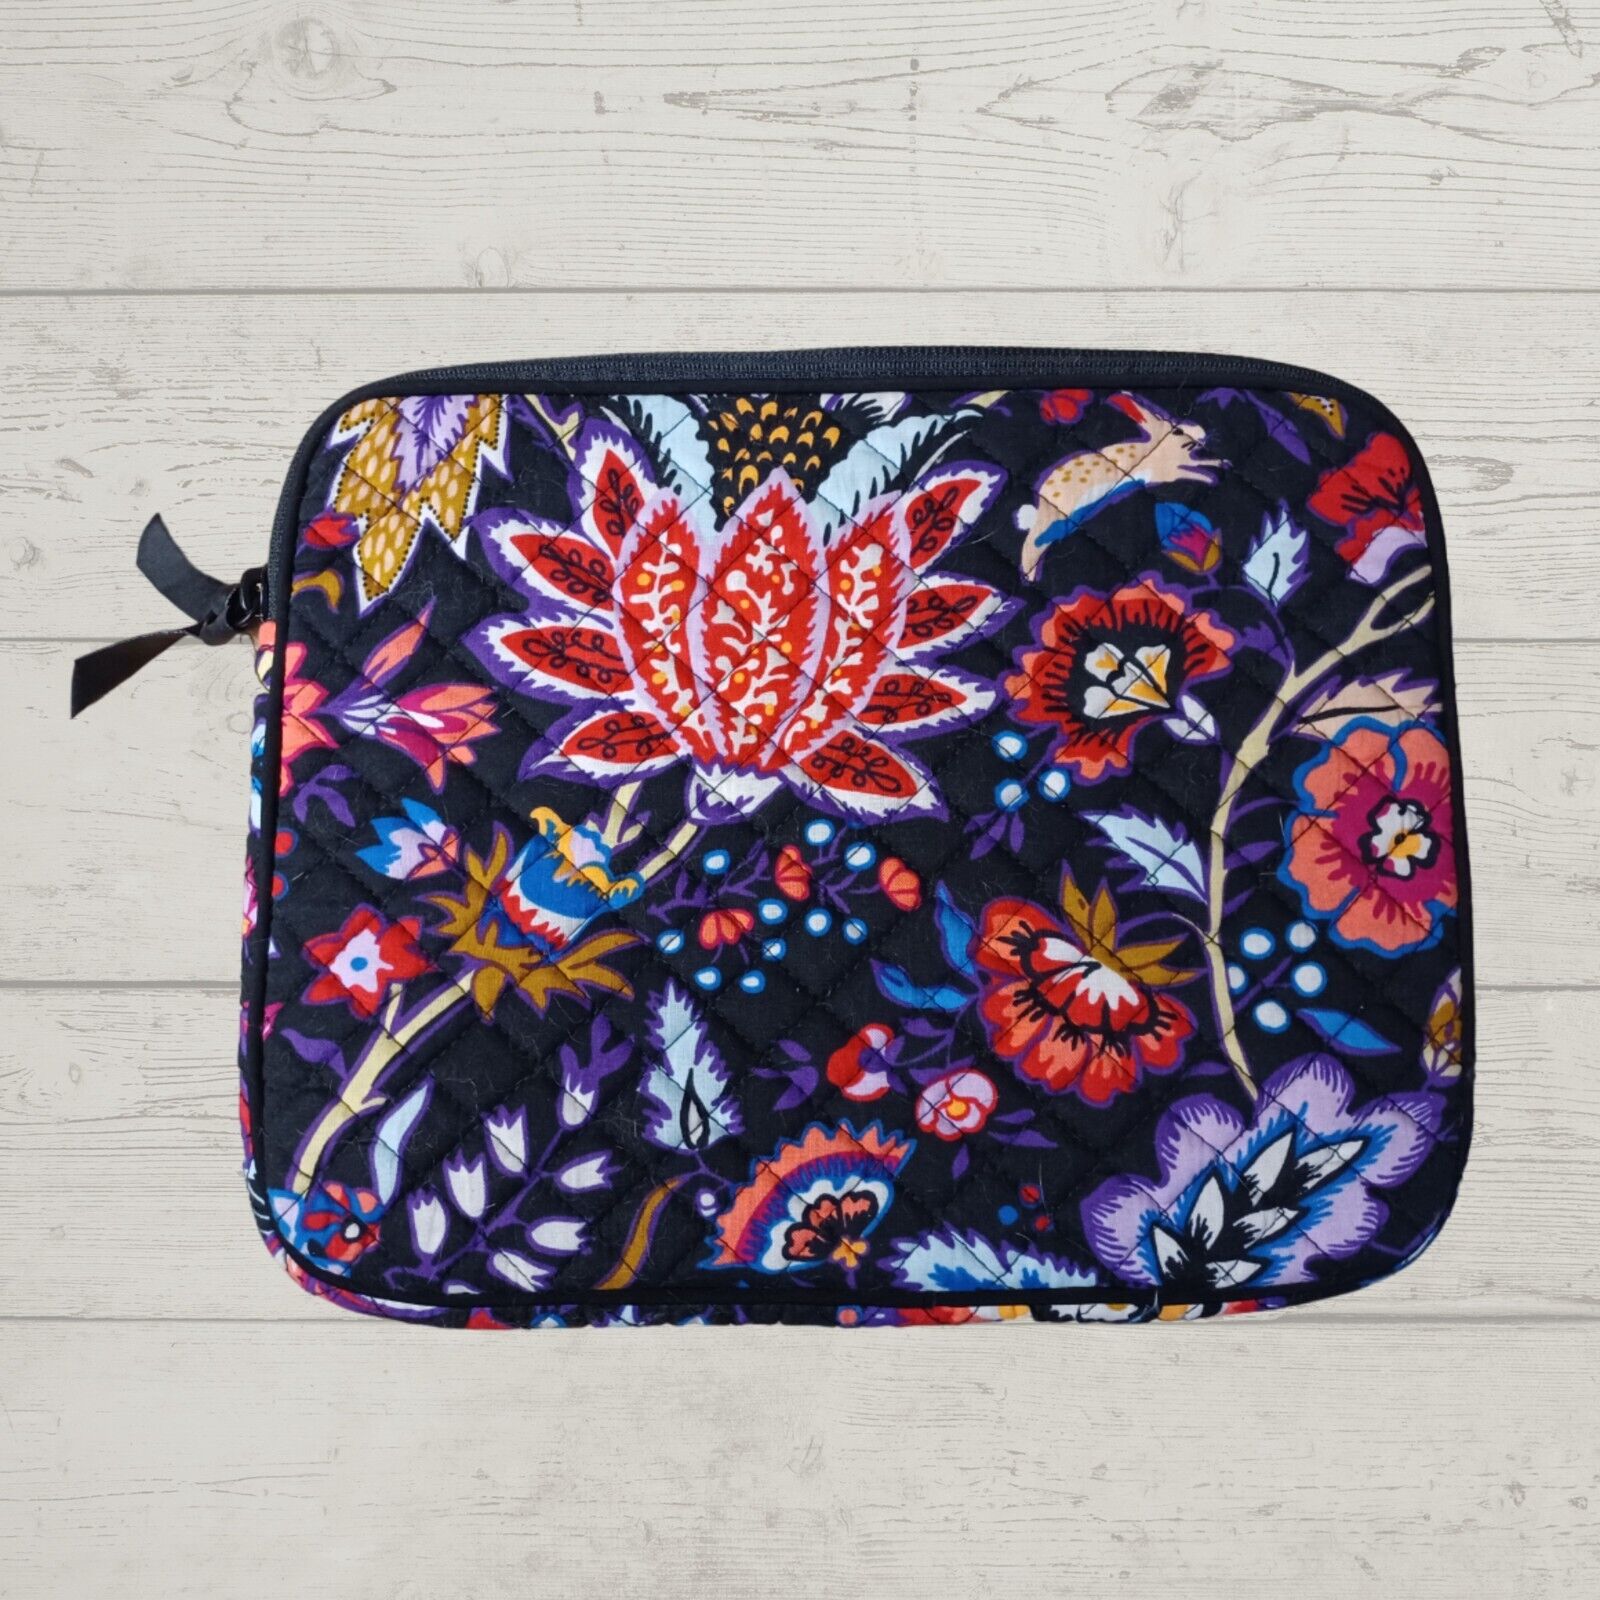 Vera Bradley Retired Foxwood Black Floral Pattern Zippered Tablet Case Carry Bag